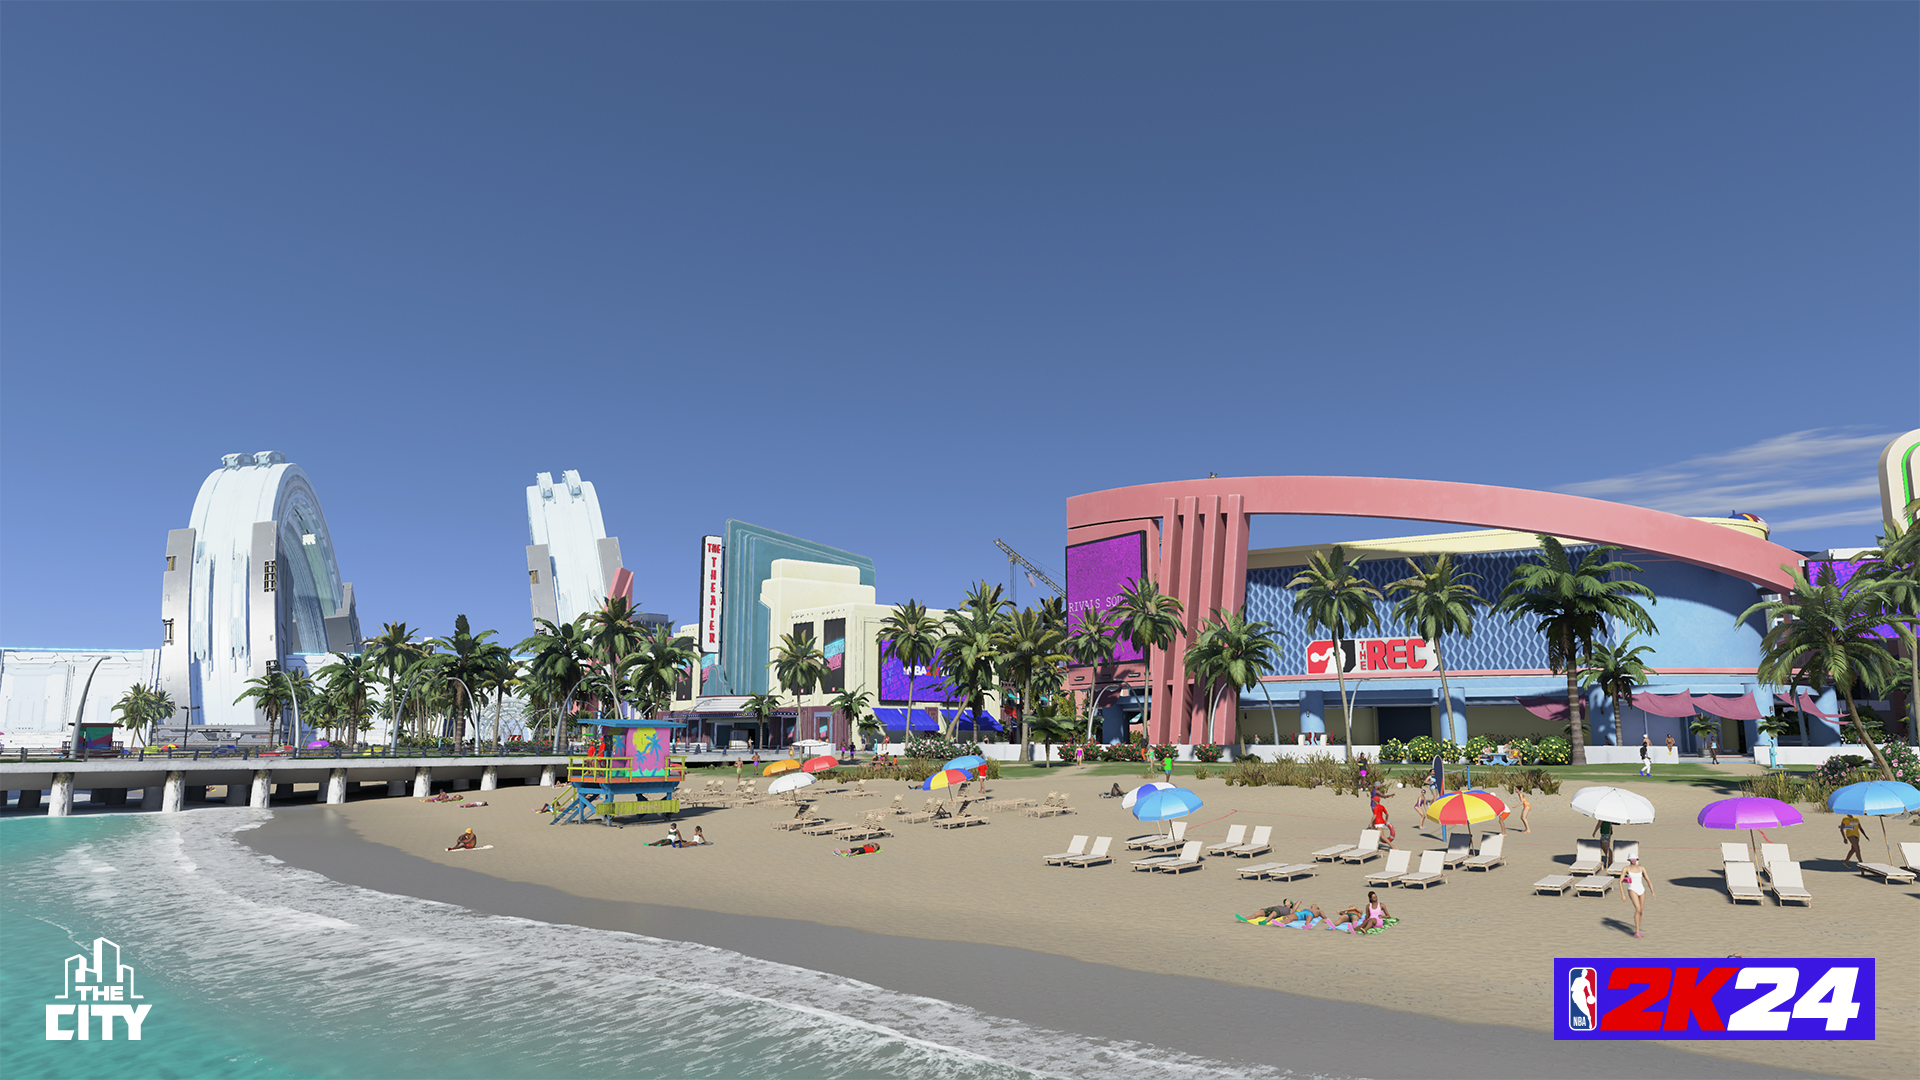 The City Beachfront